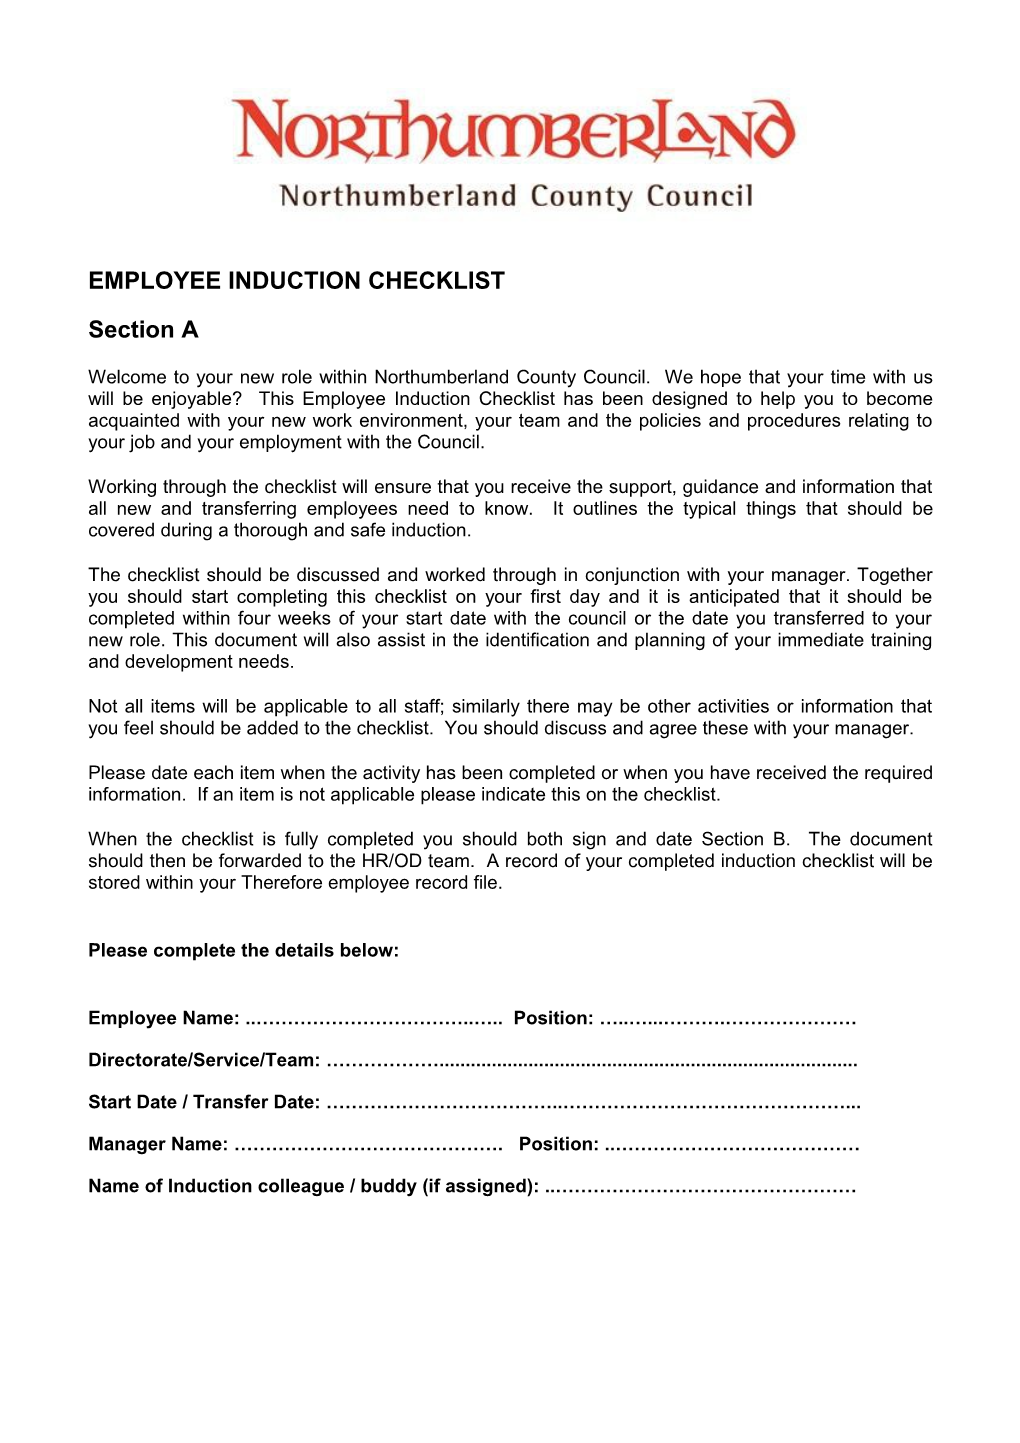 Employee Induction Checklist